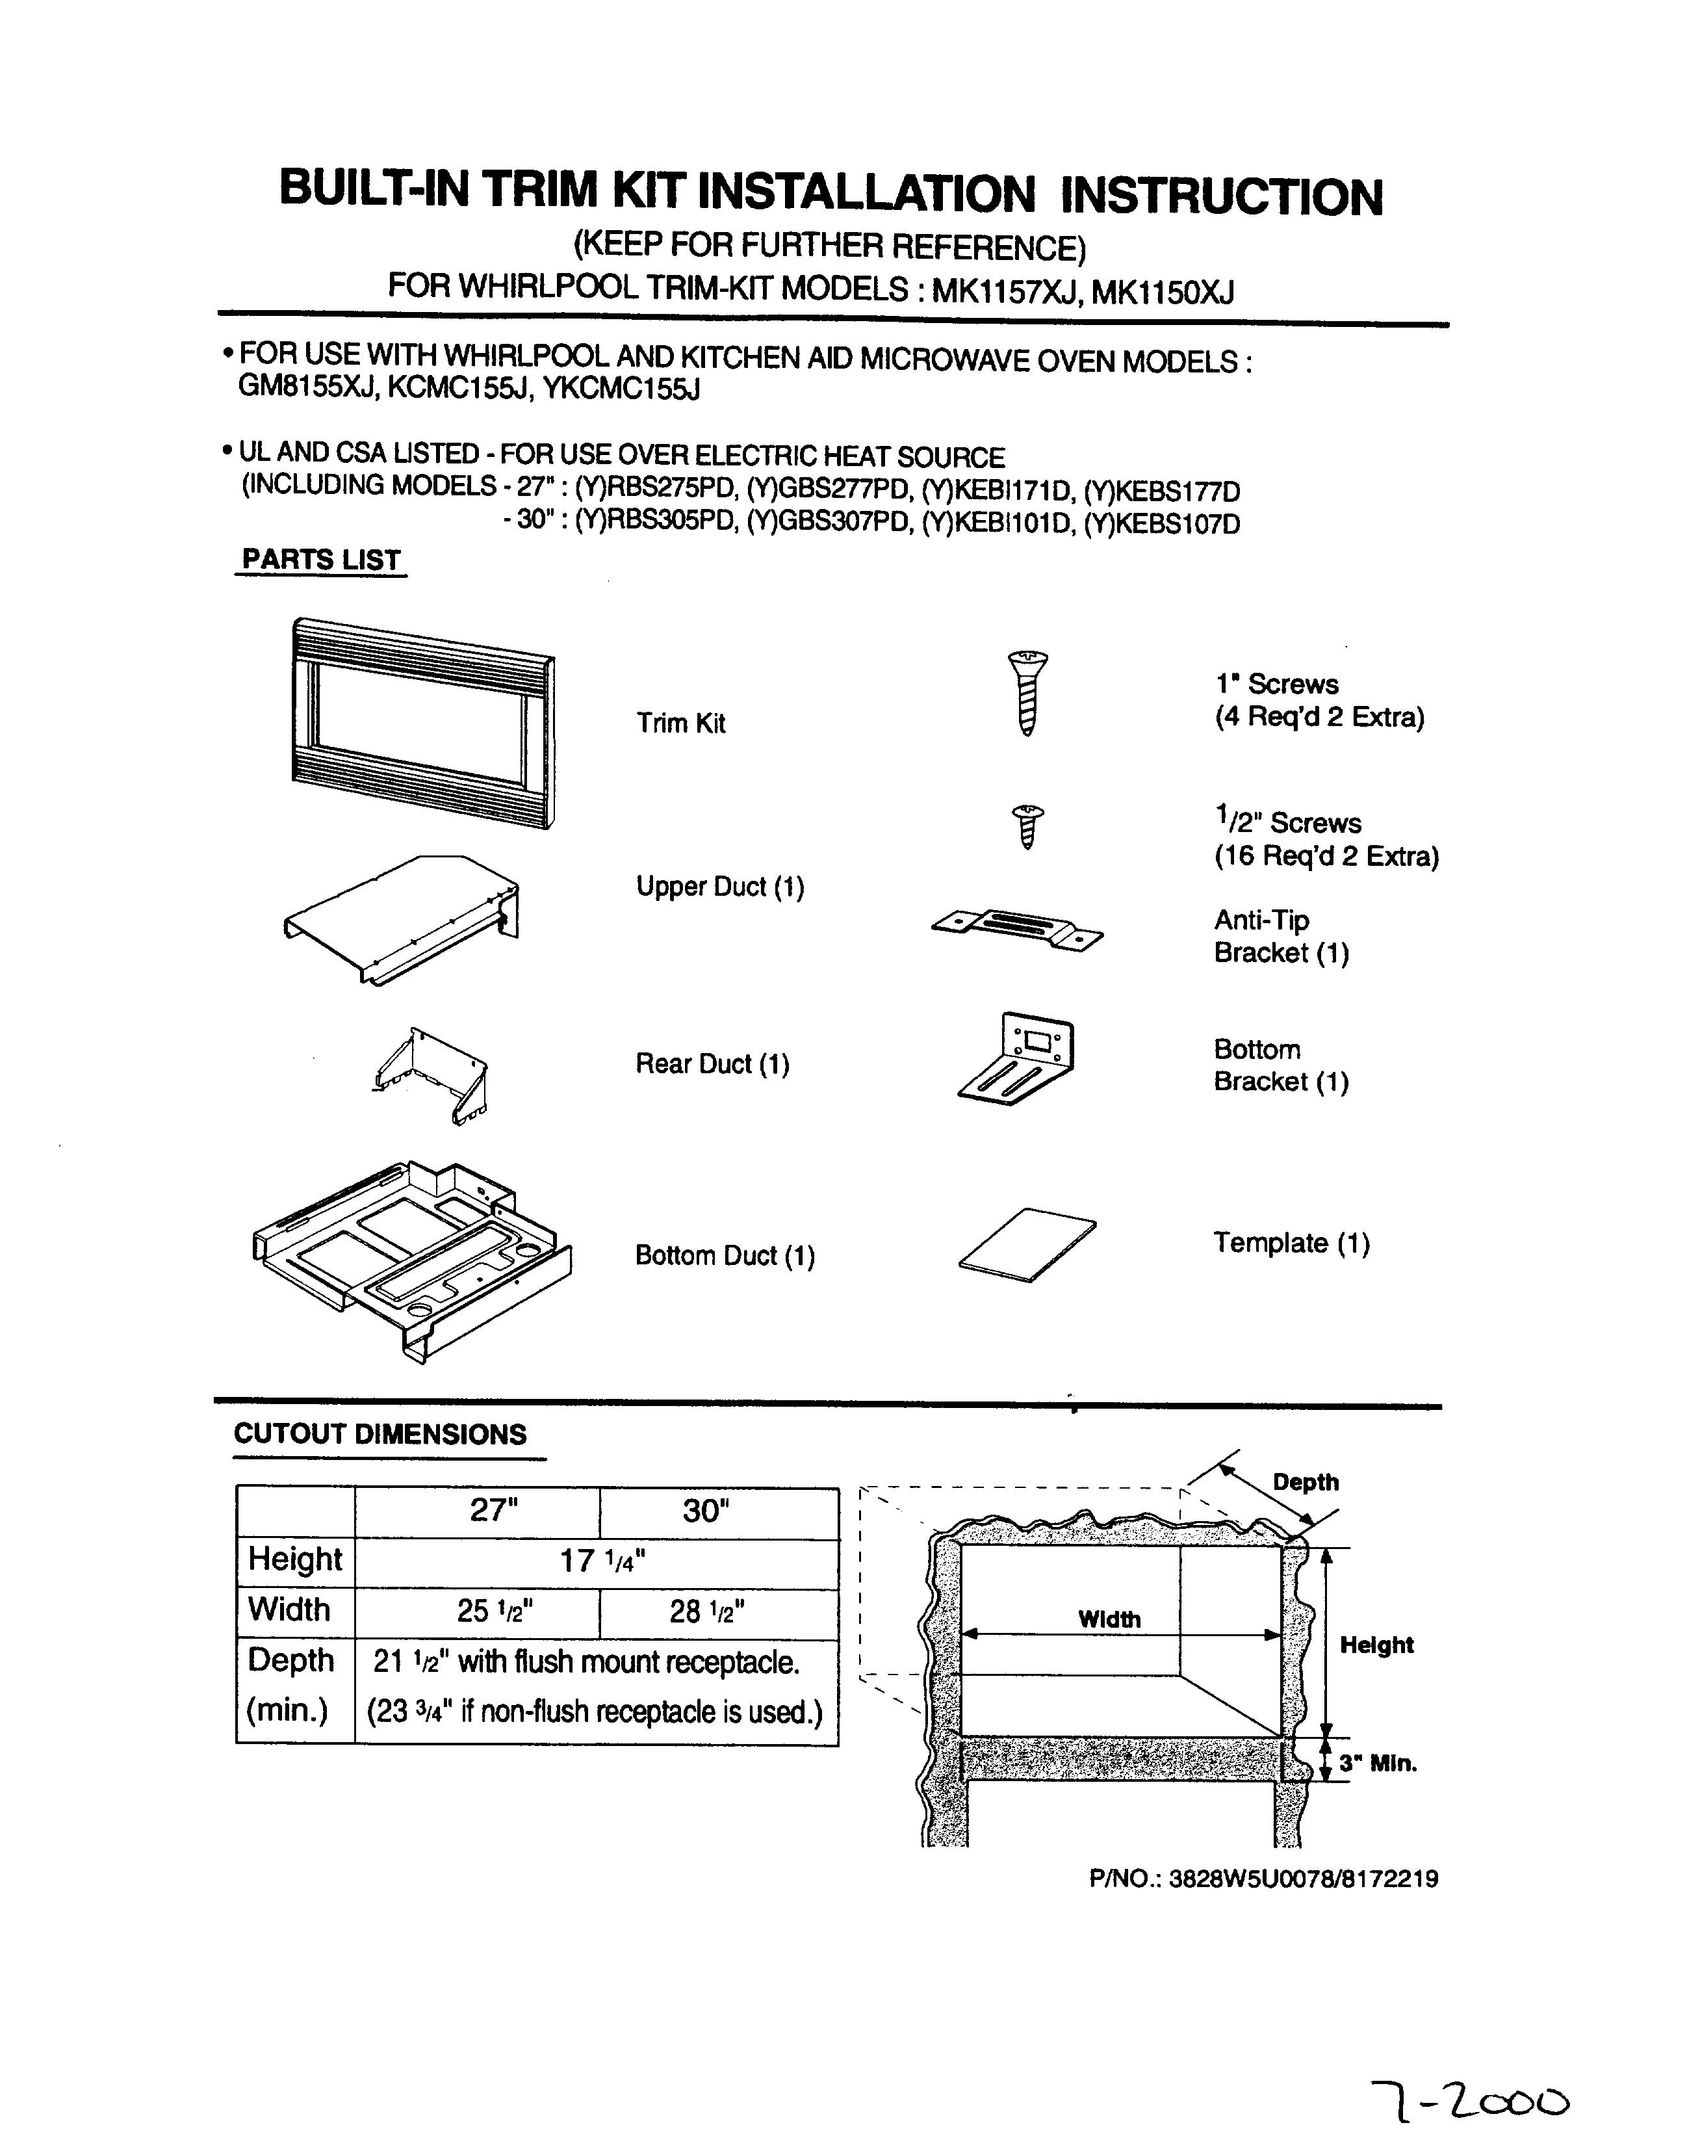 Whirlpool MK1150XJ Appliance Trim Kit User Manual